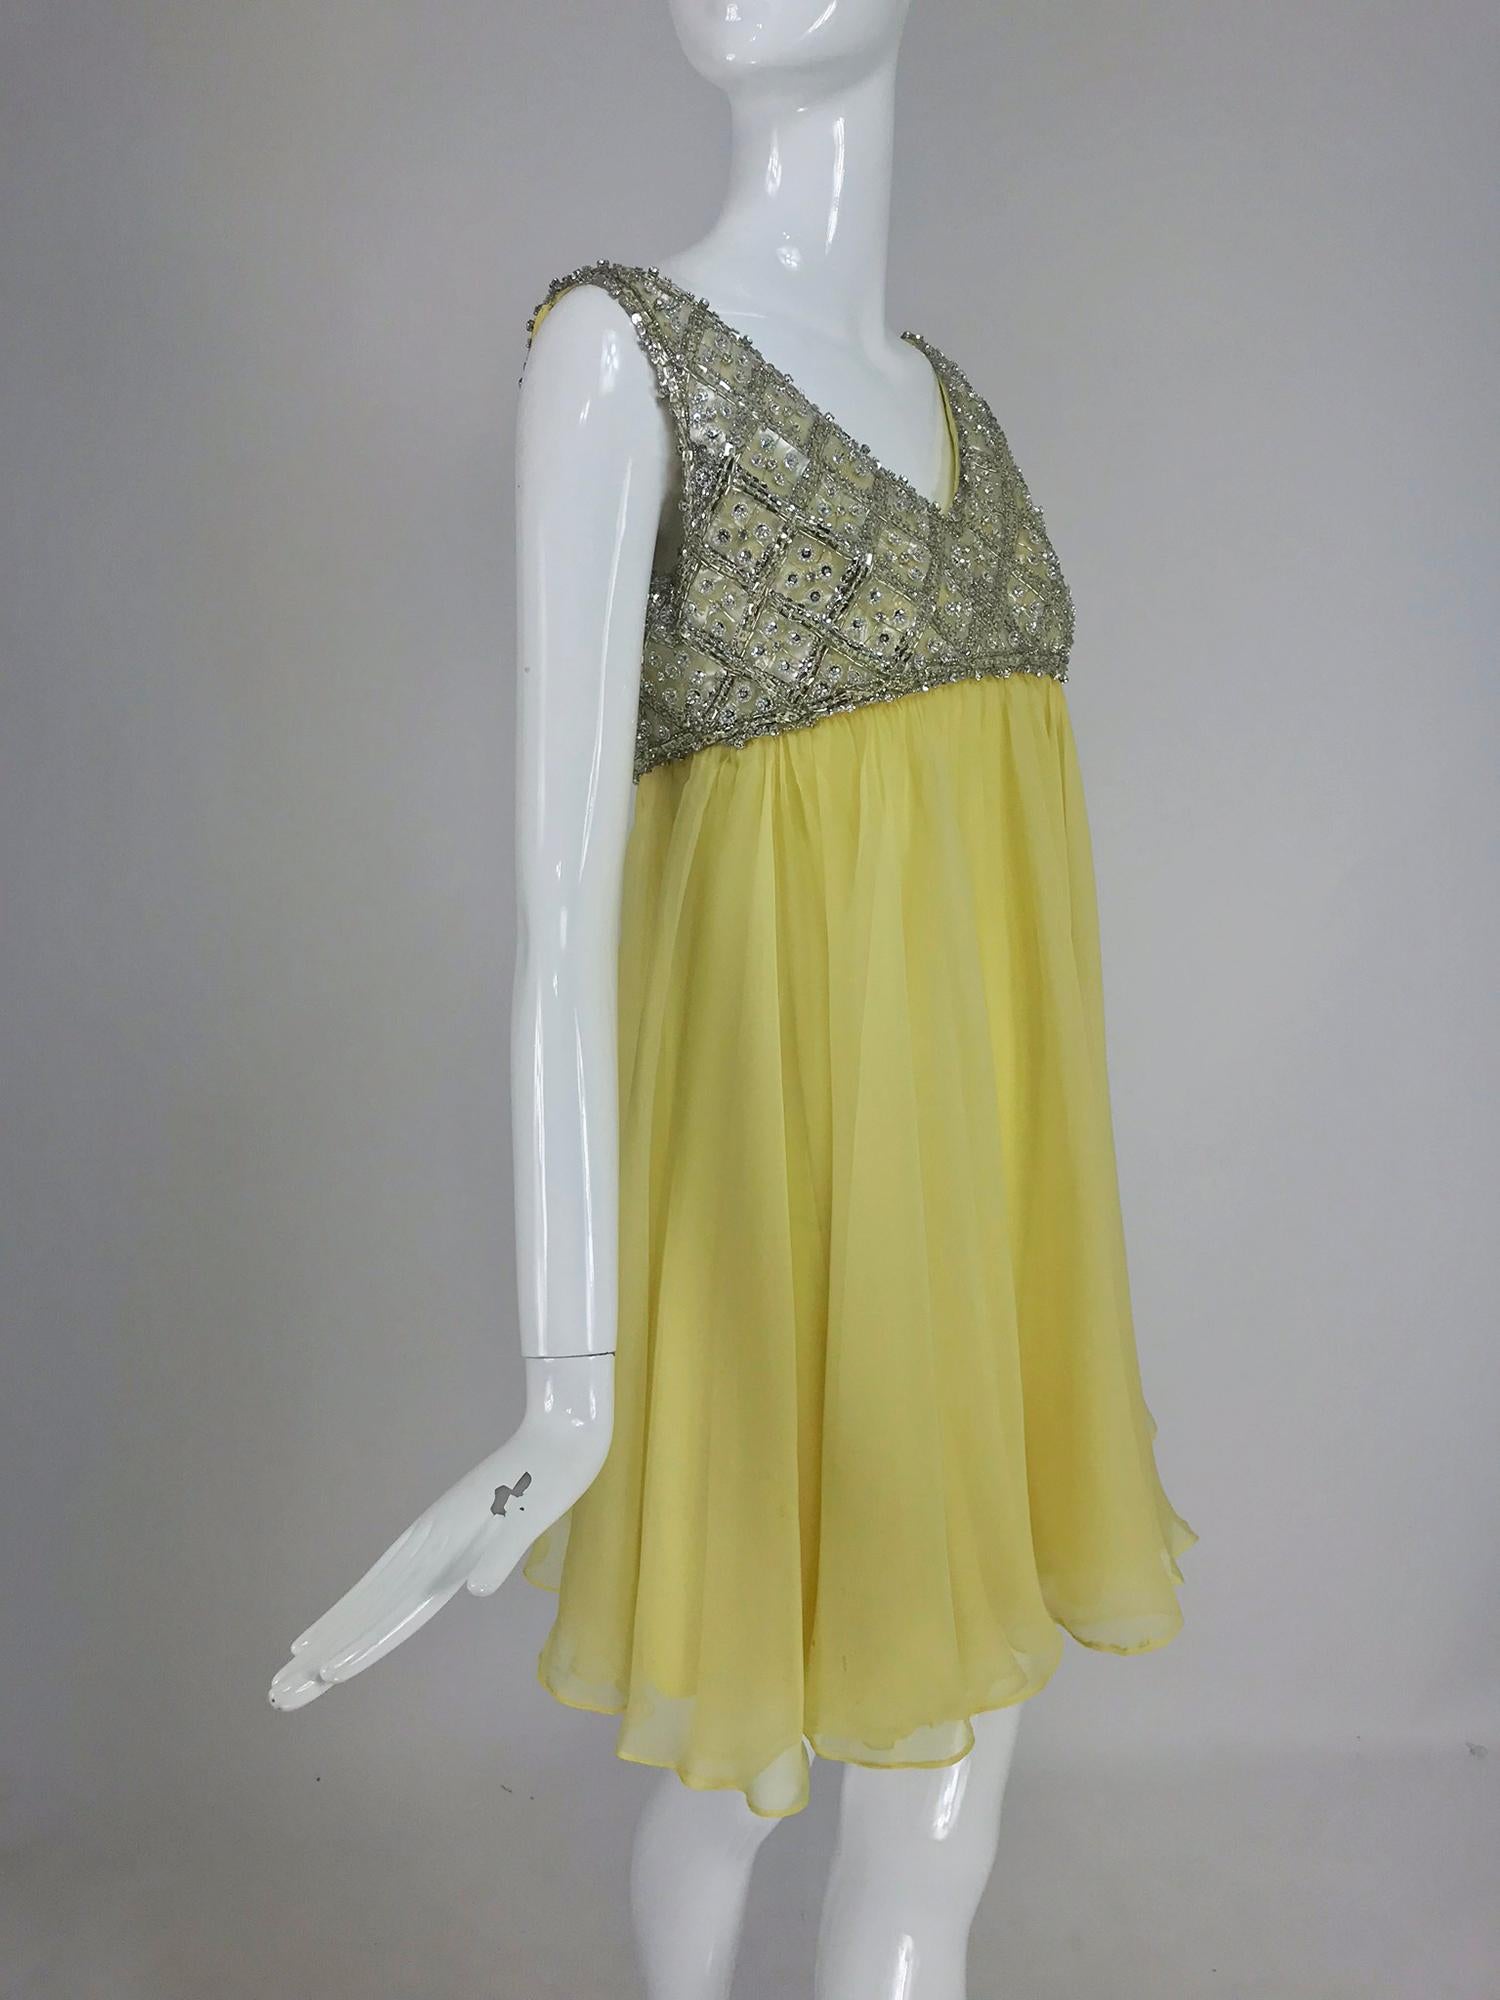 Malcolm Starr Baby Doll dress rhinestones and Lemon Chiffon Silk 1960s 5